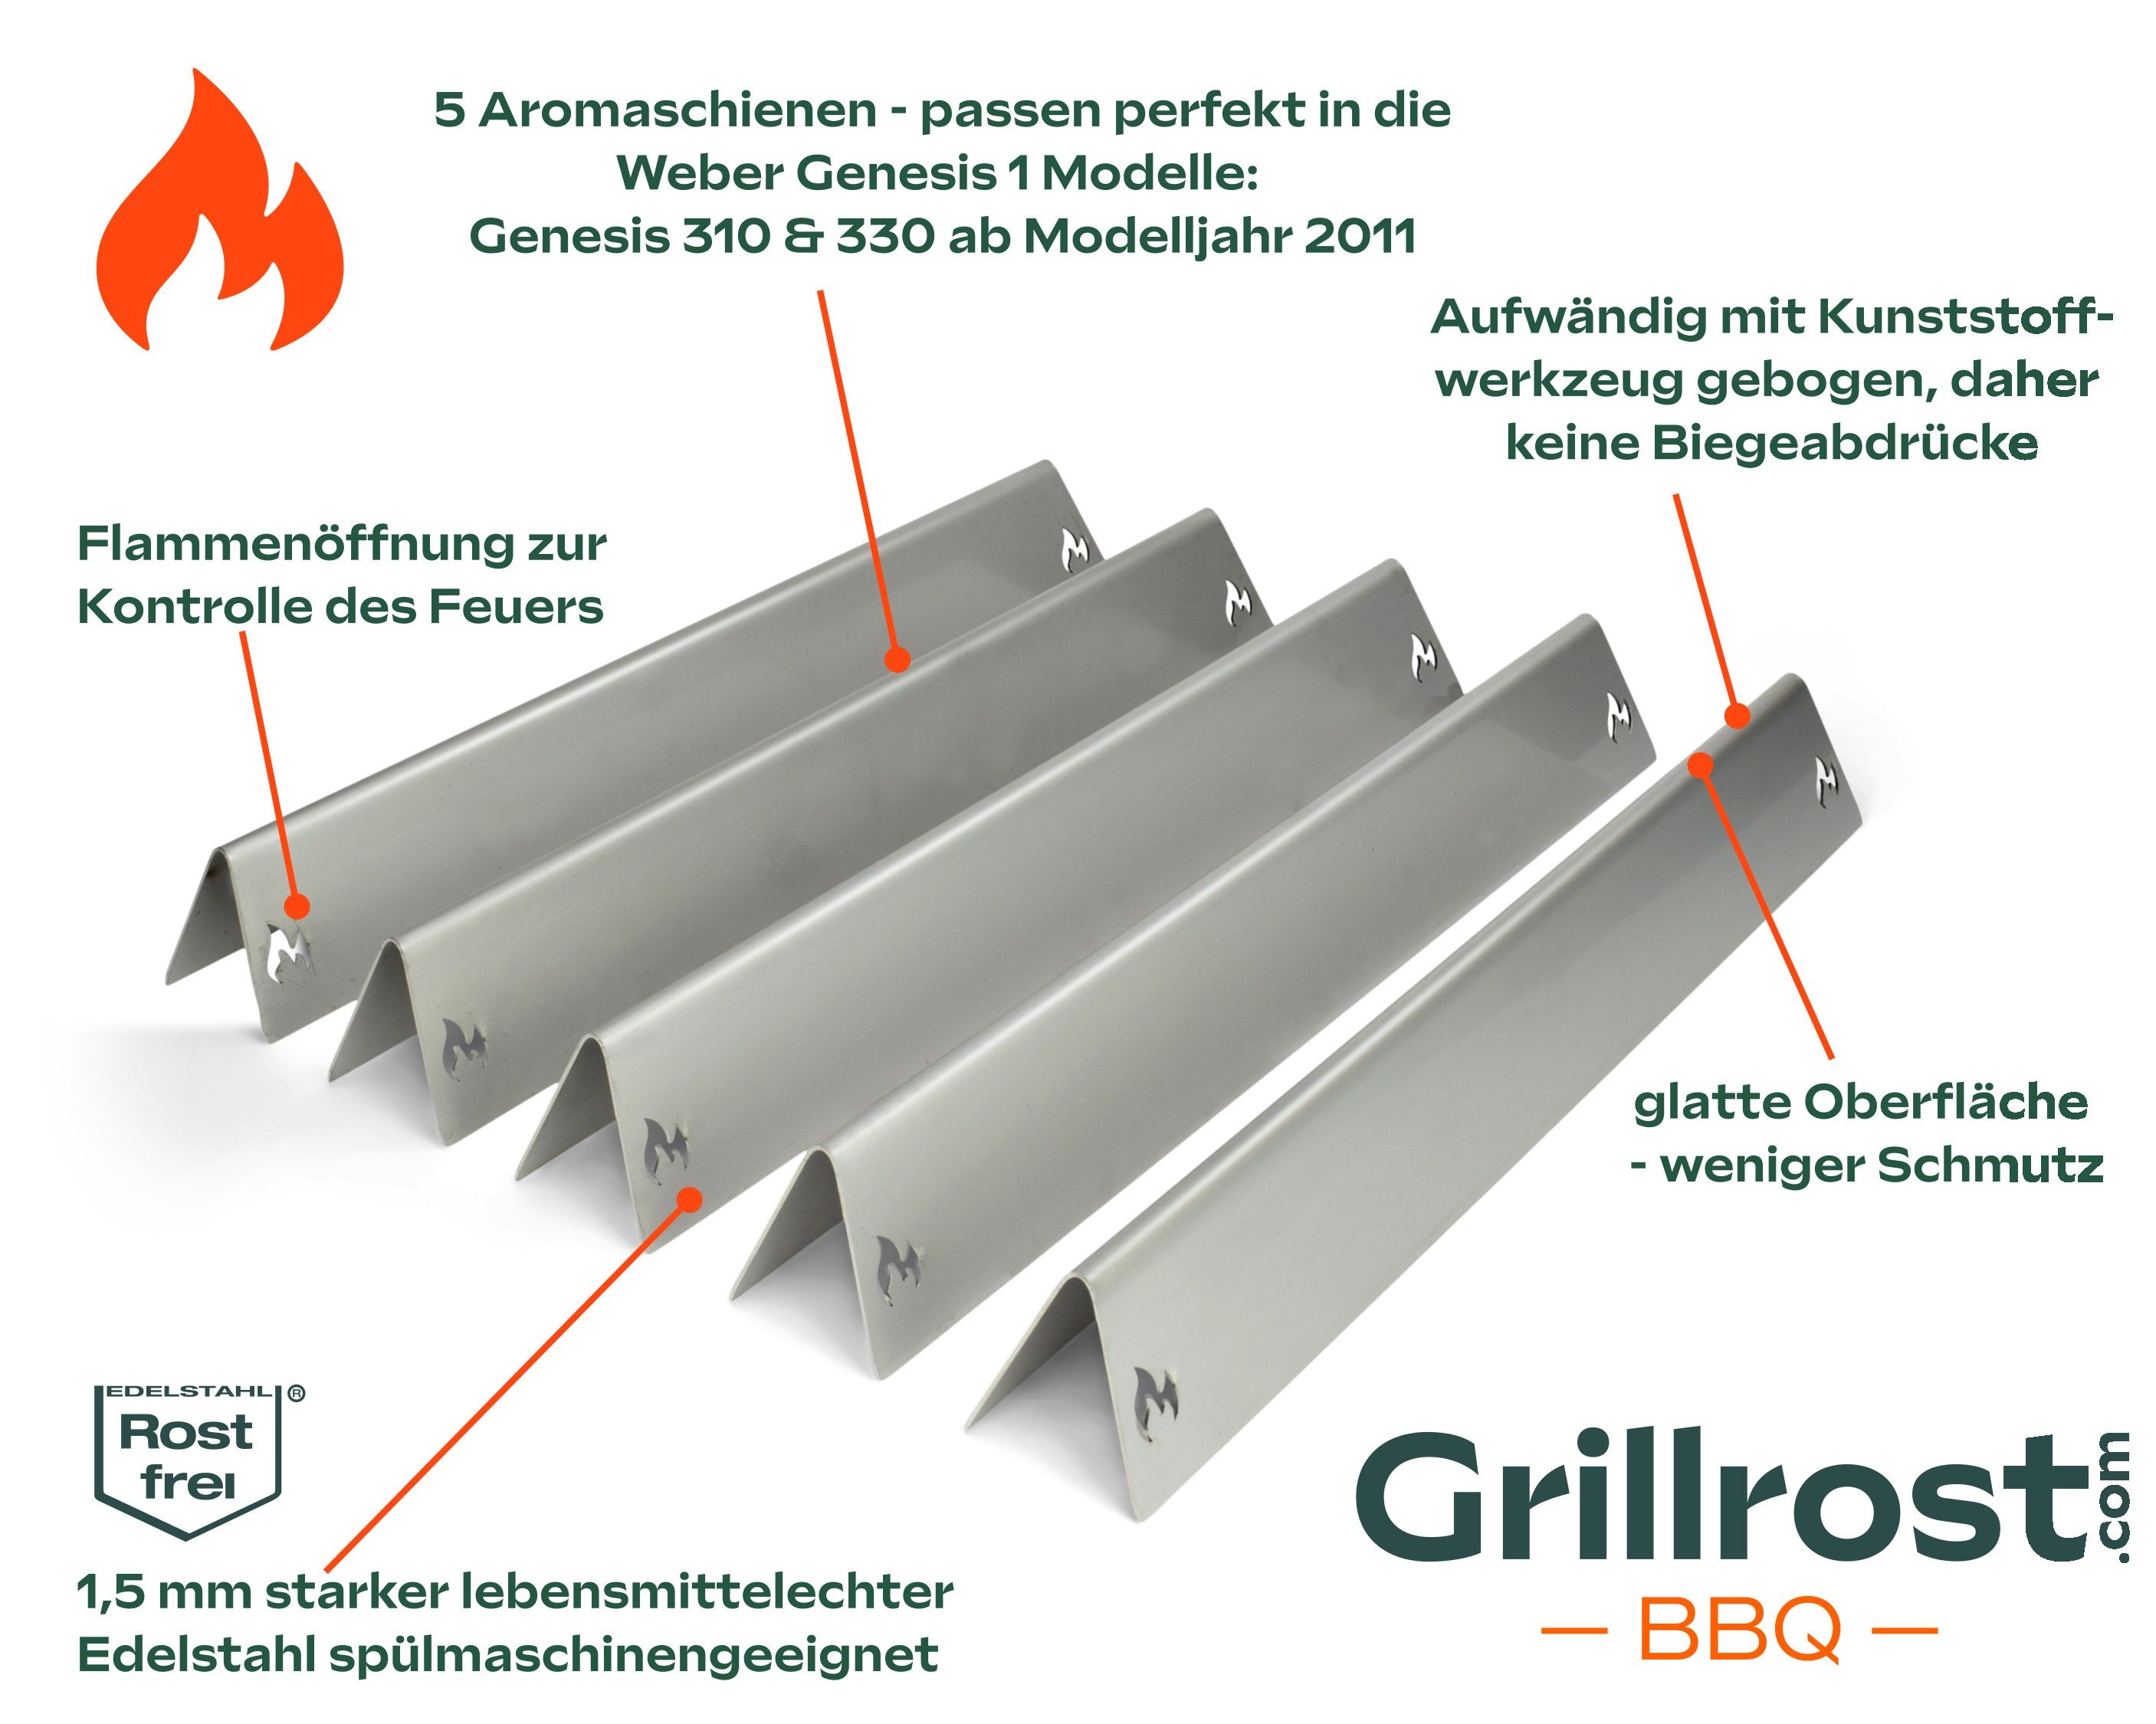 Stainless steel aroma rails for Weber Burner cover for Genesis 300 series